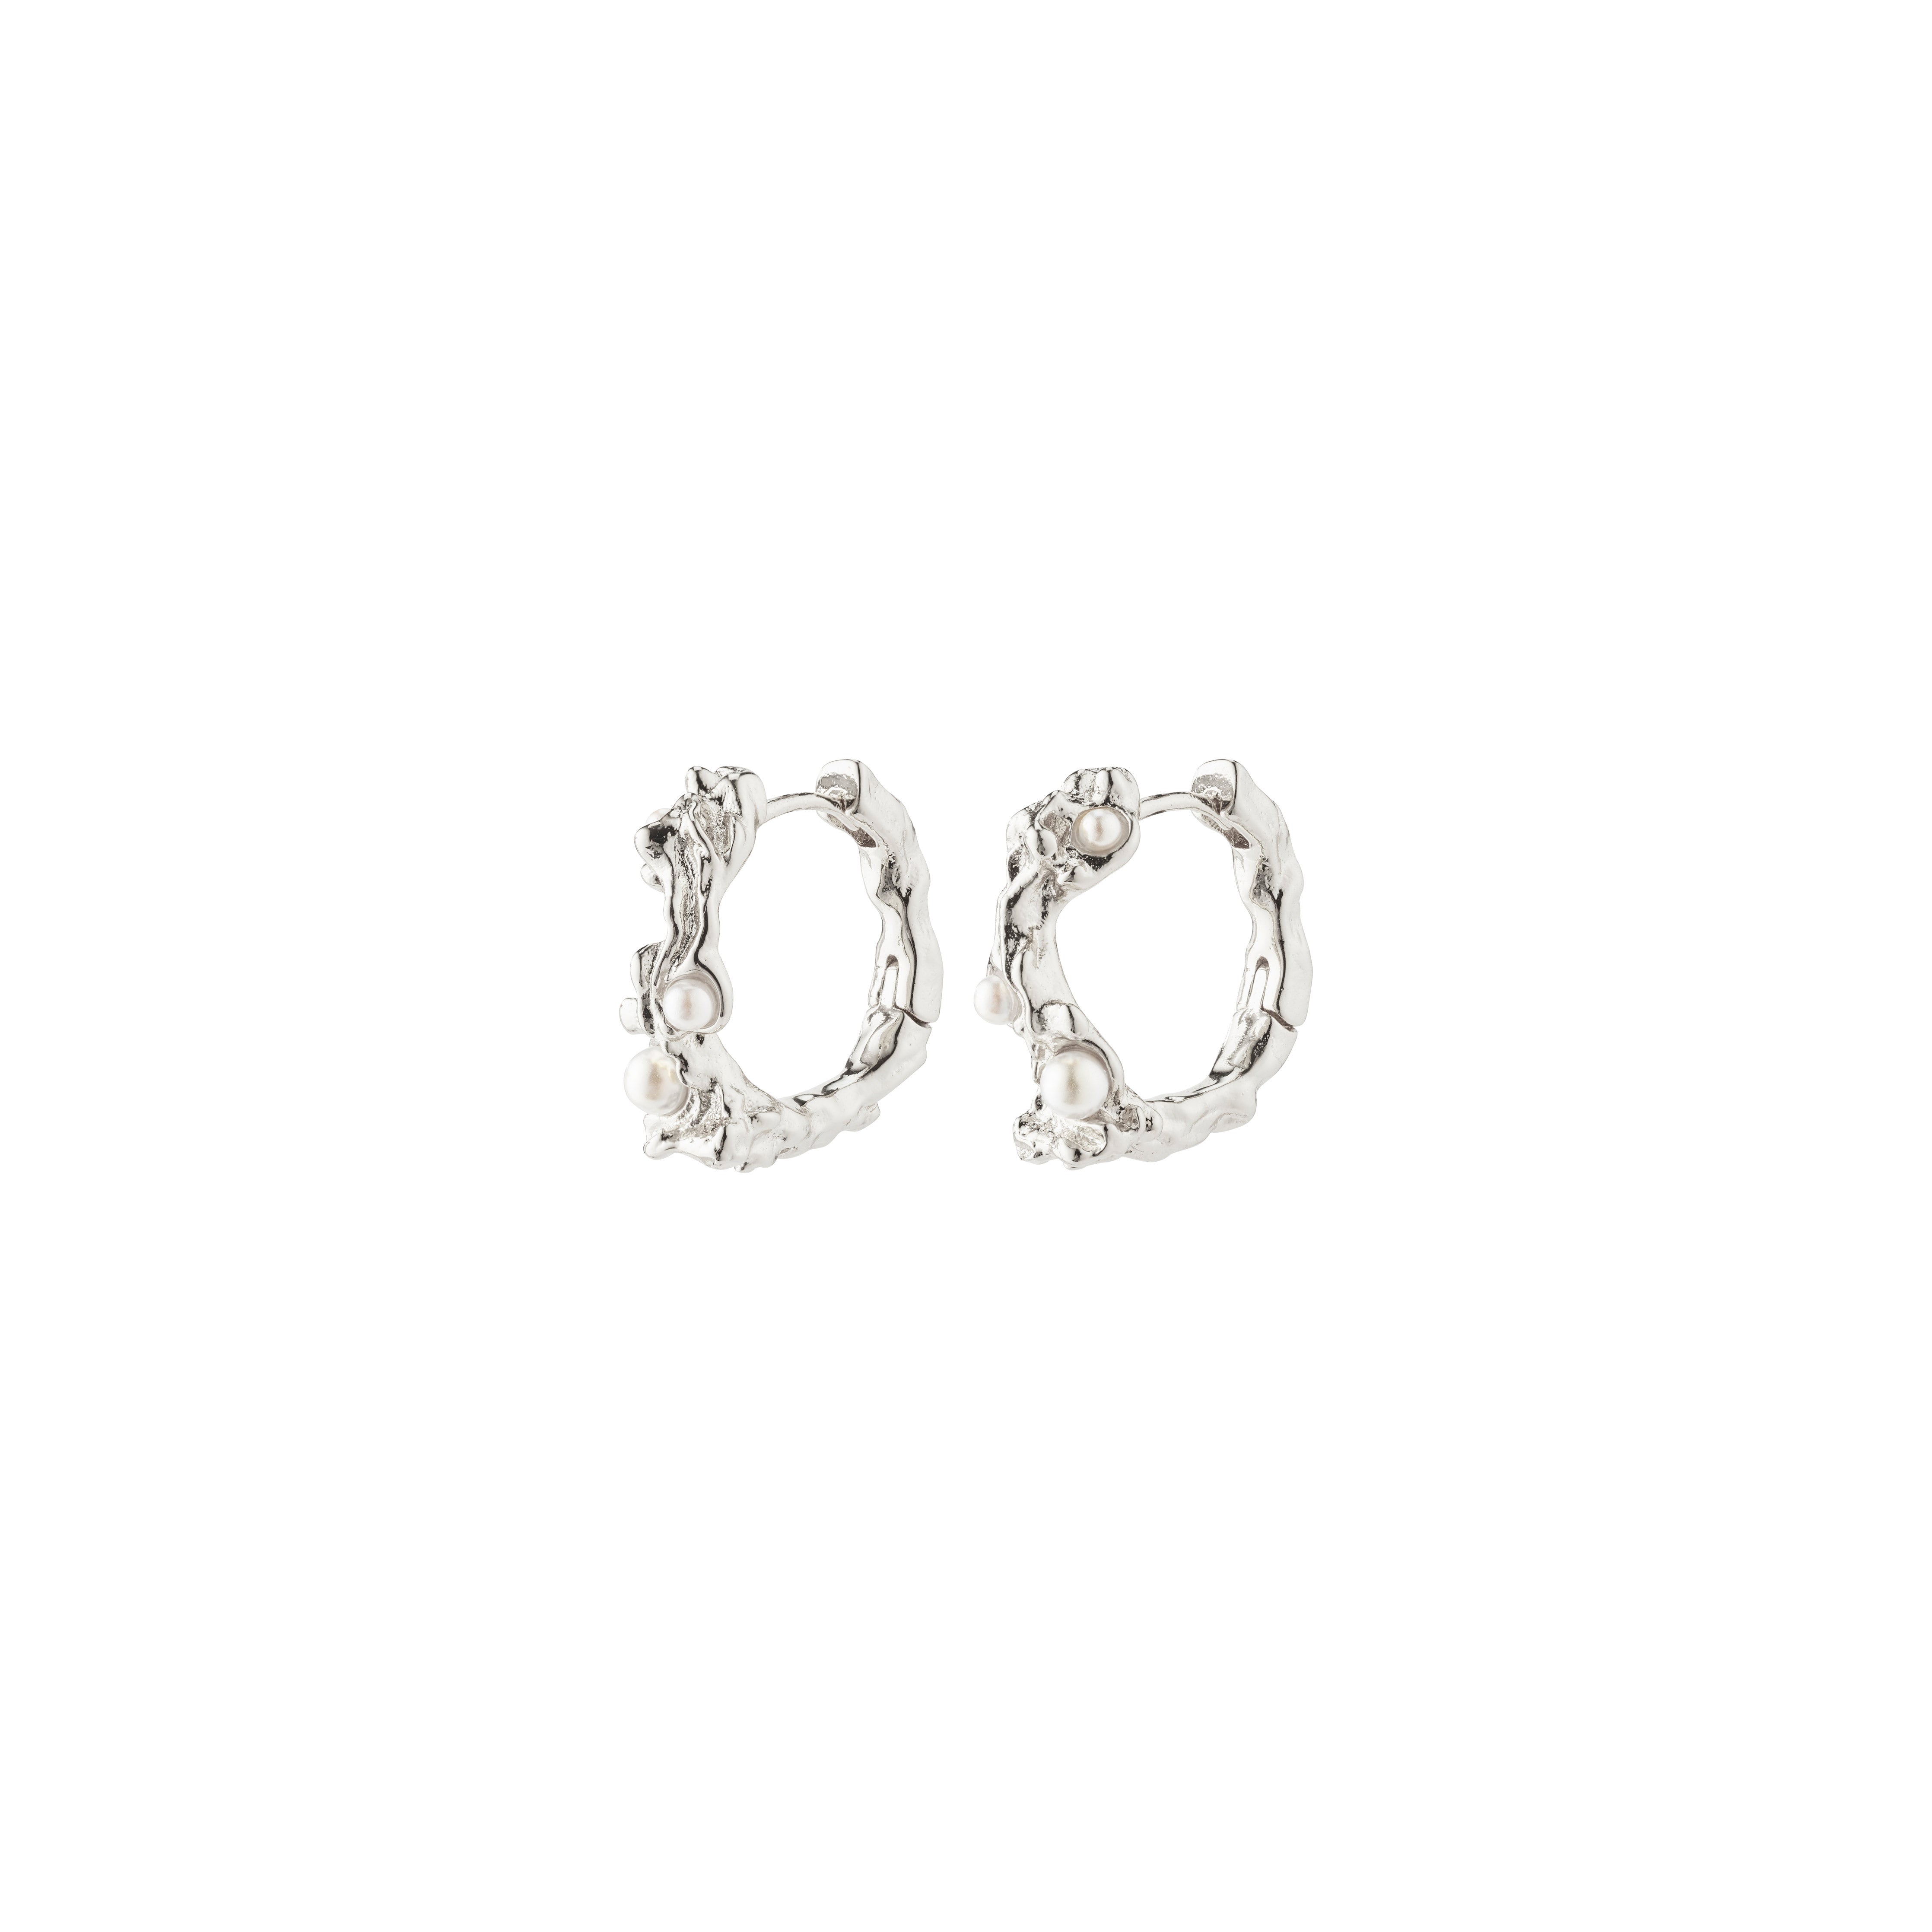 RAELYNN recycled earrings silver-plated